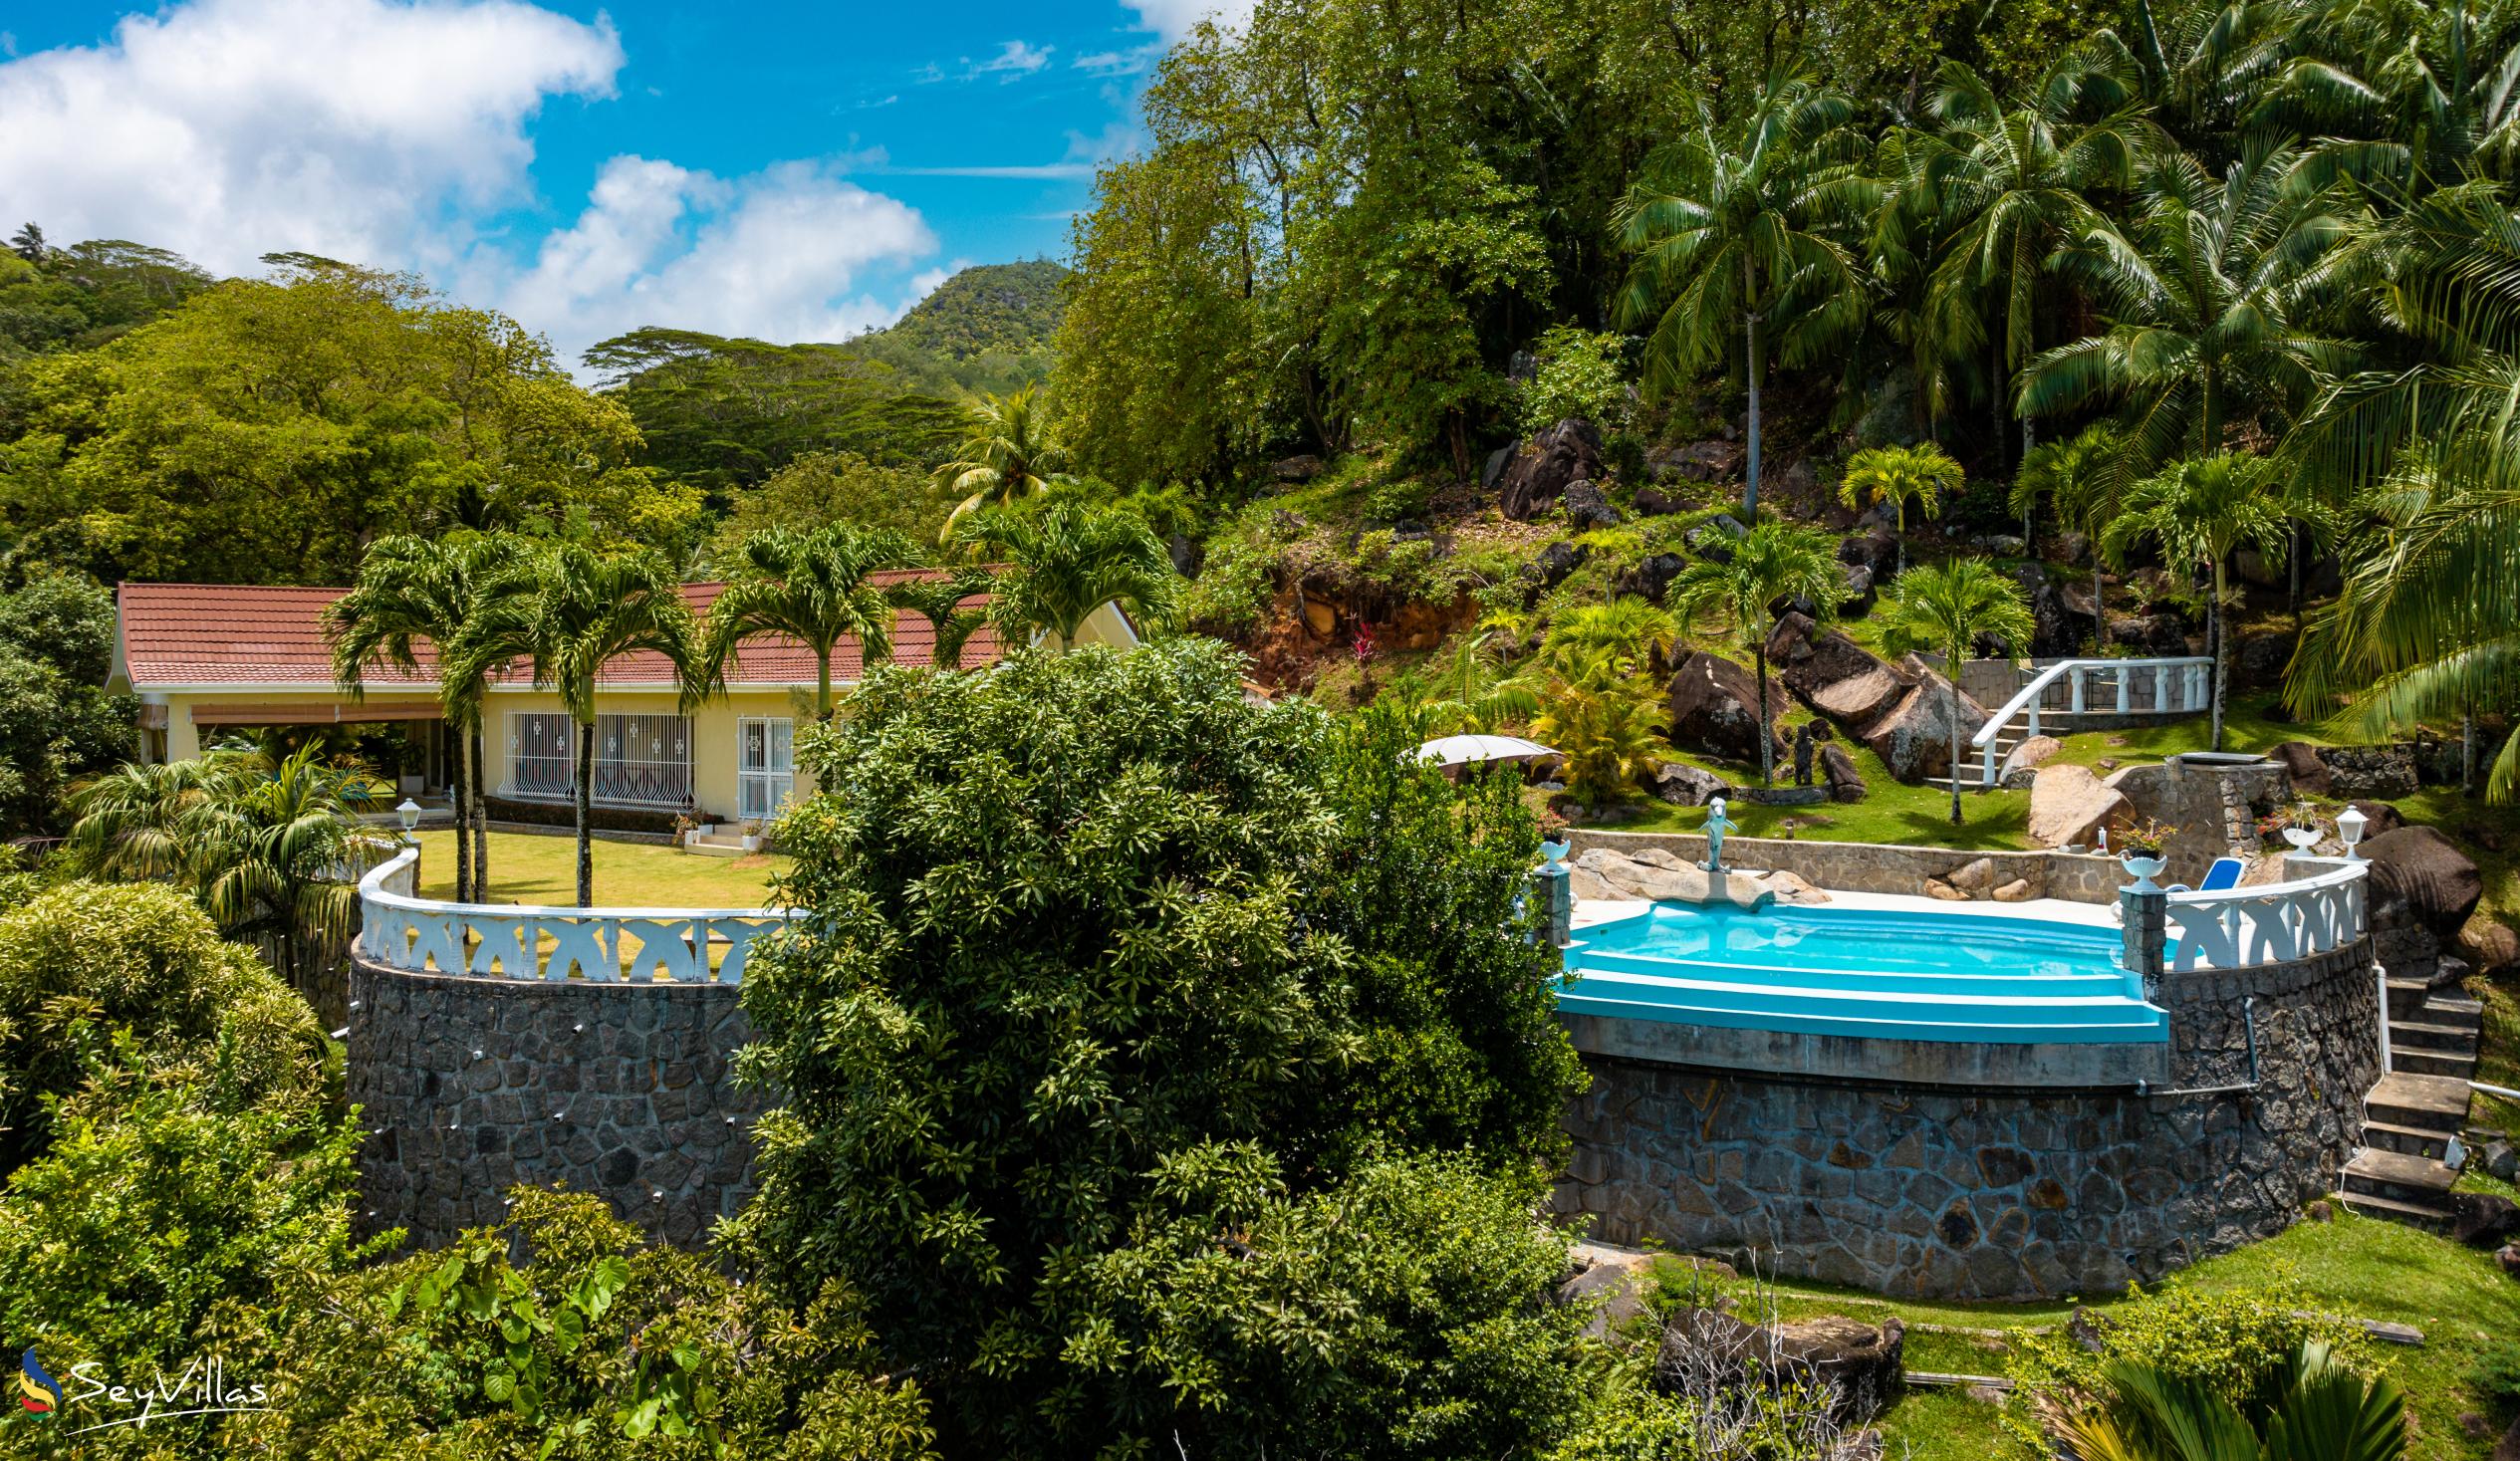 Photo 2: Villa Gazebo - Outdoor area - Mahé (Seychelles)